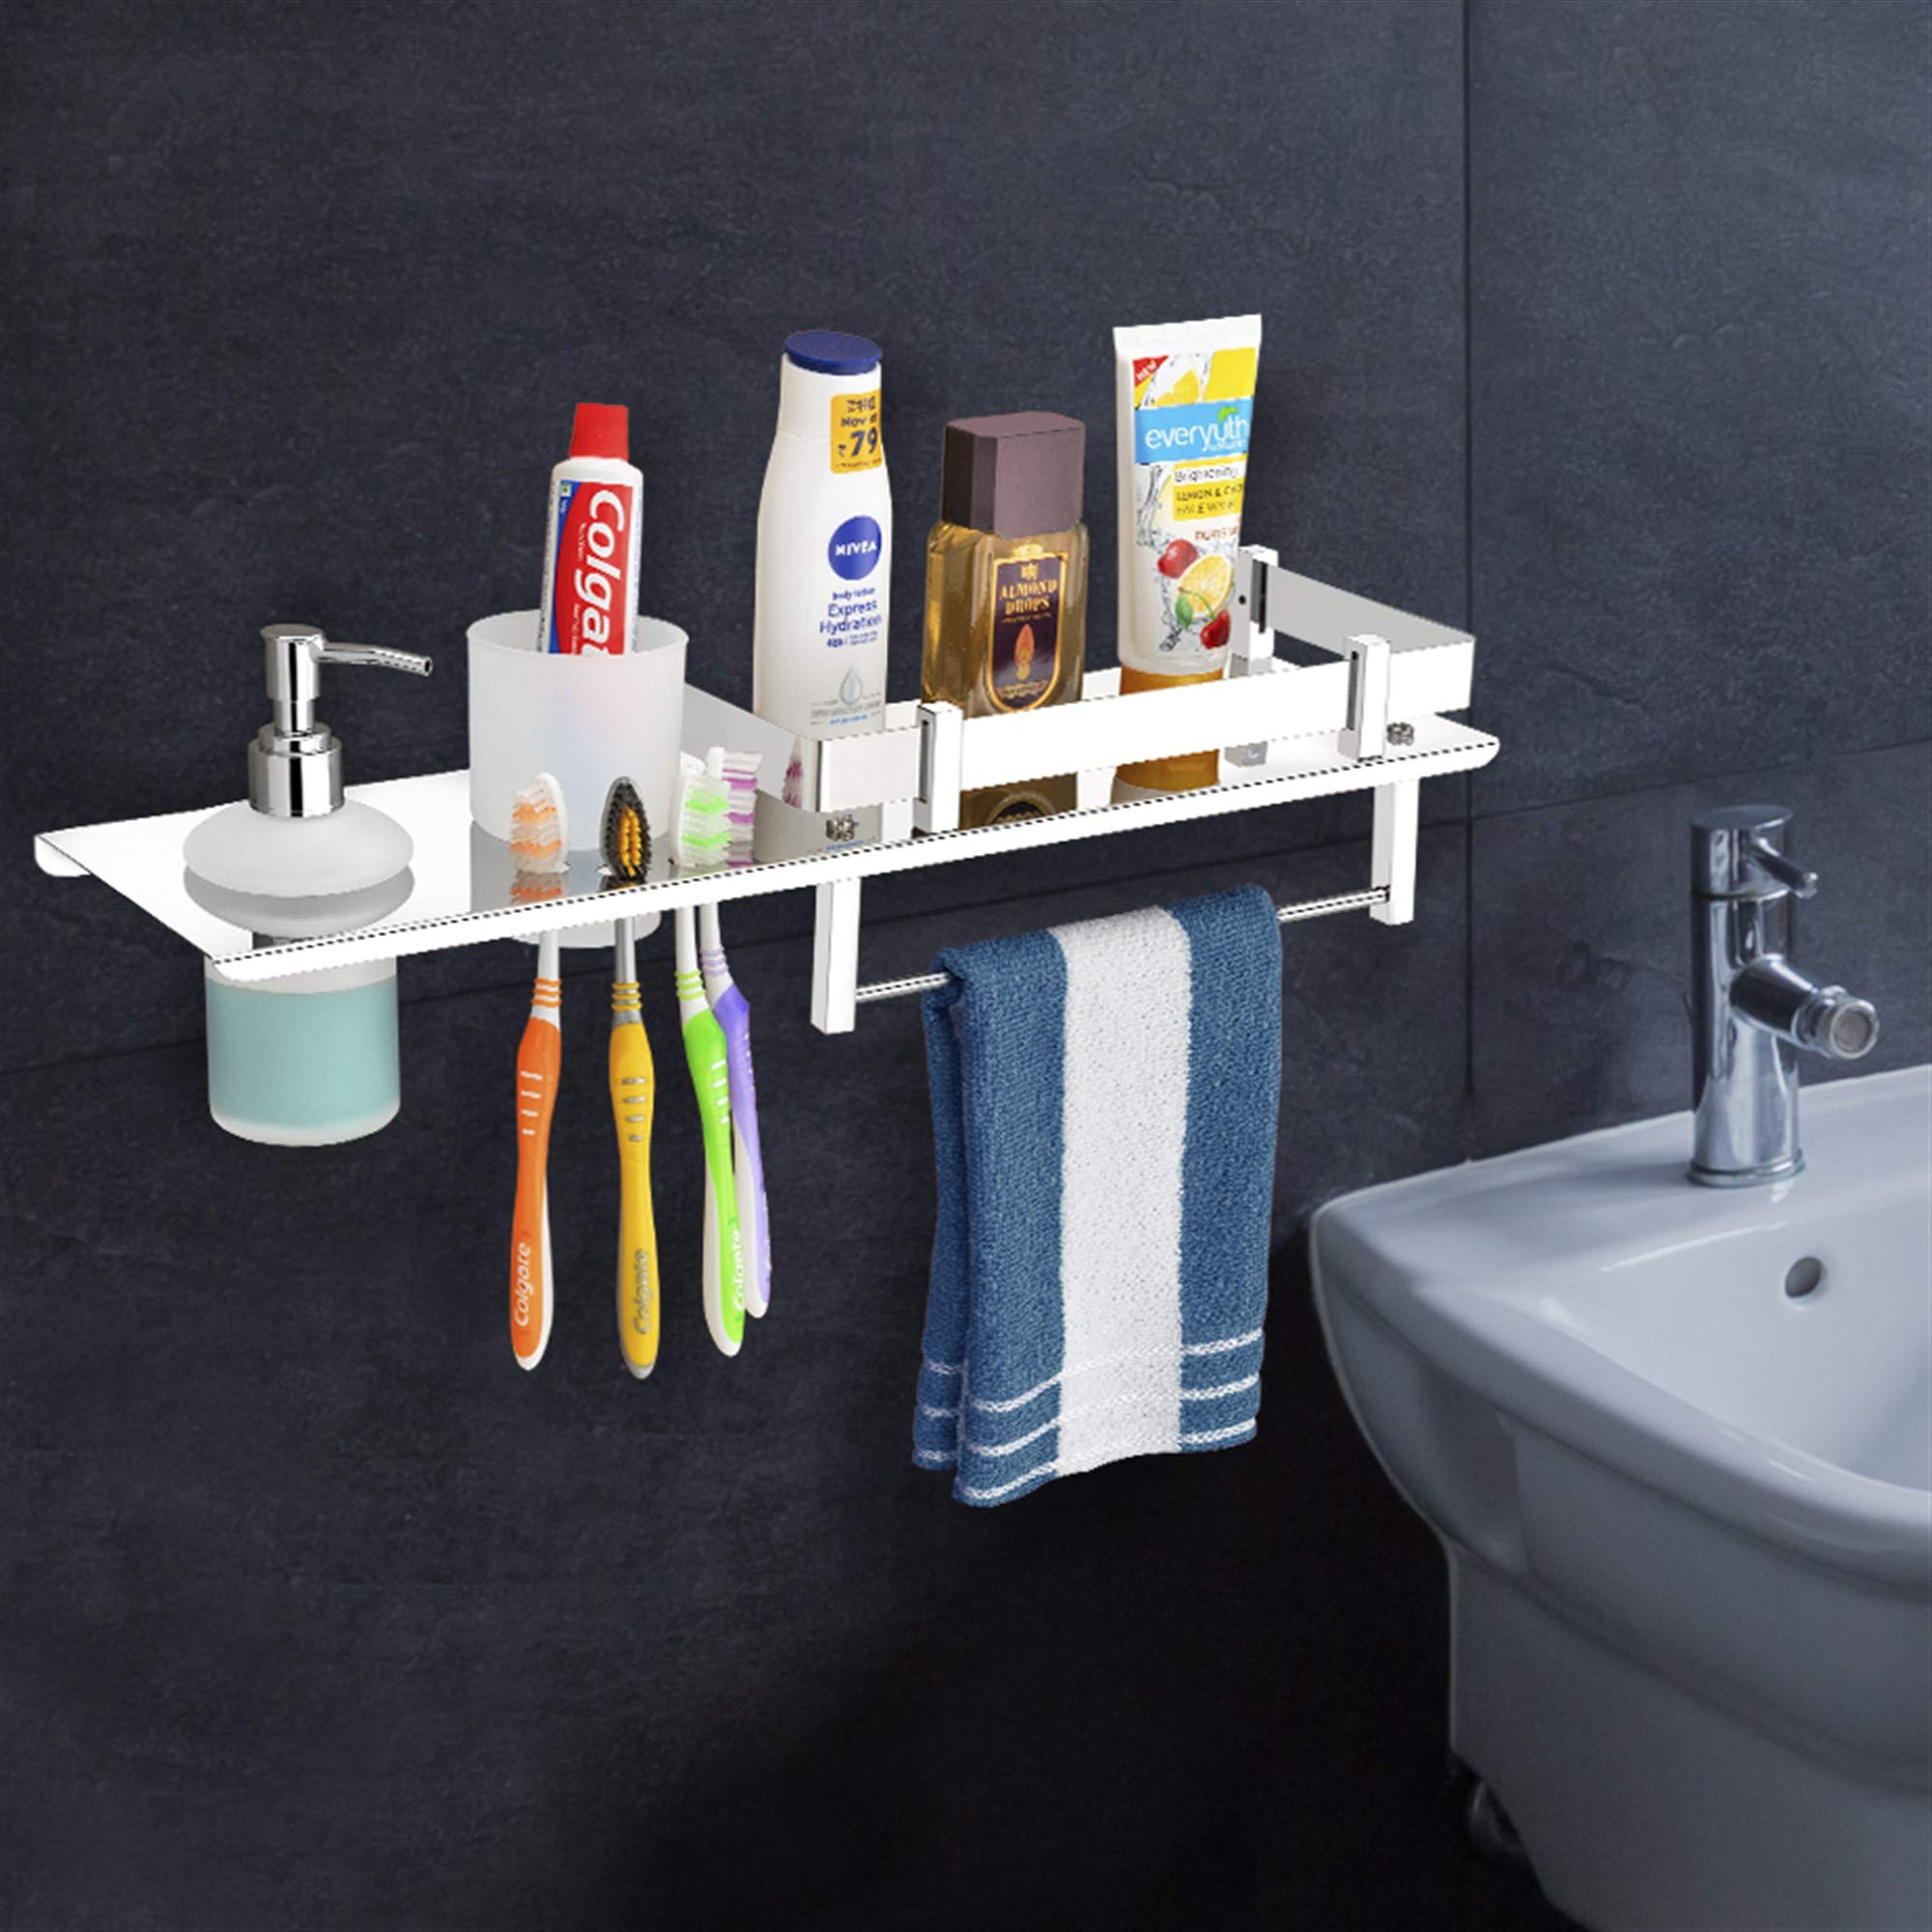 Plantex Stainless Steel 4in1 Multipurpose Bathroom Shelf/Bathroom Steel Rack with Tumbler Holder, Towel Rod and Liquid Soap Dispenser Chrome (18x5 inches)